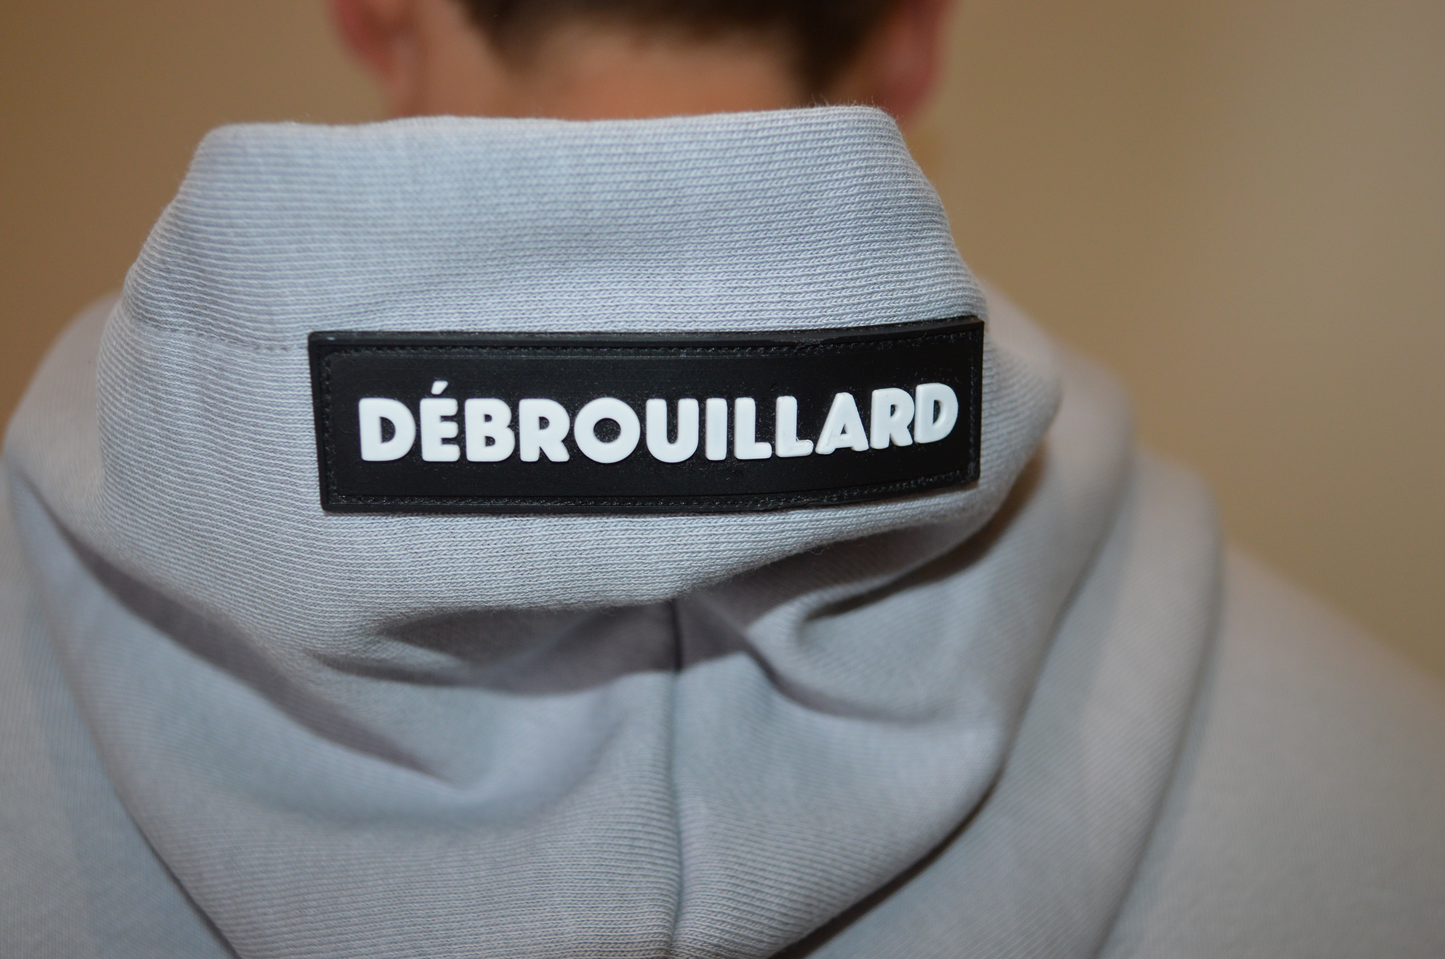 Débrouillard 'PARIS X ART STUDIOS' grey hoodie